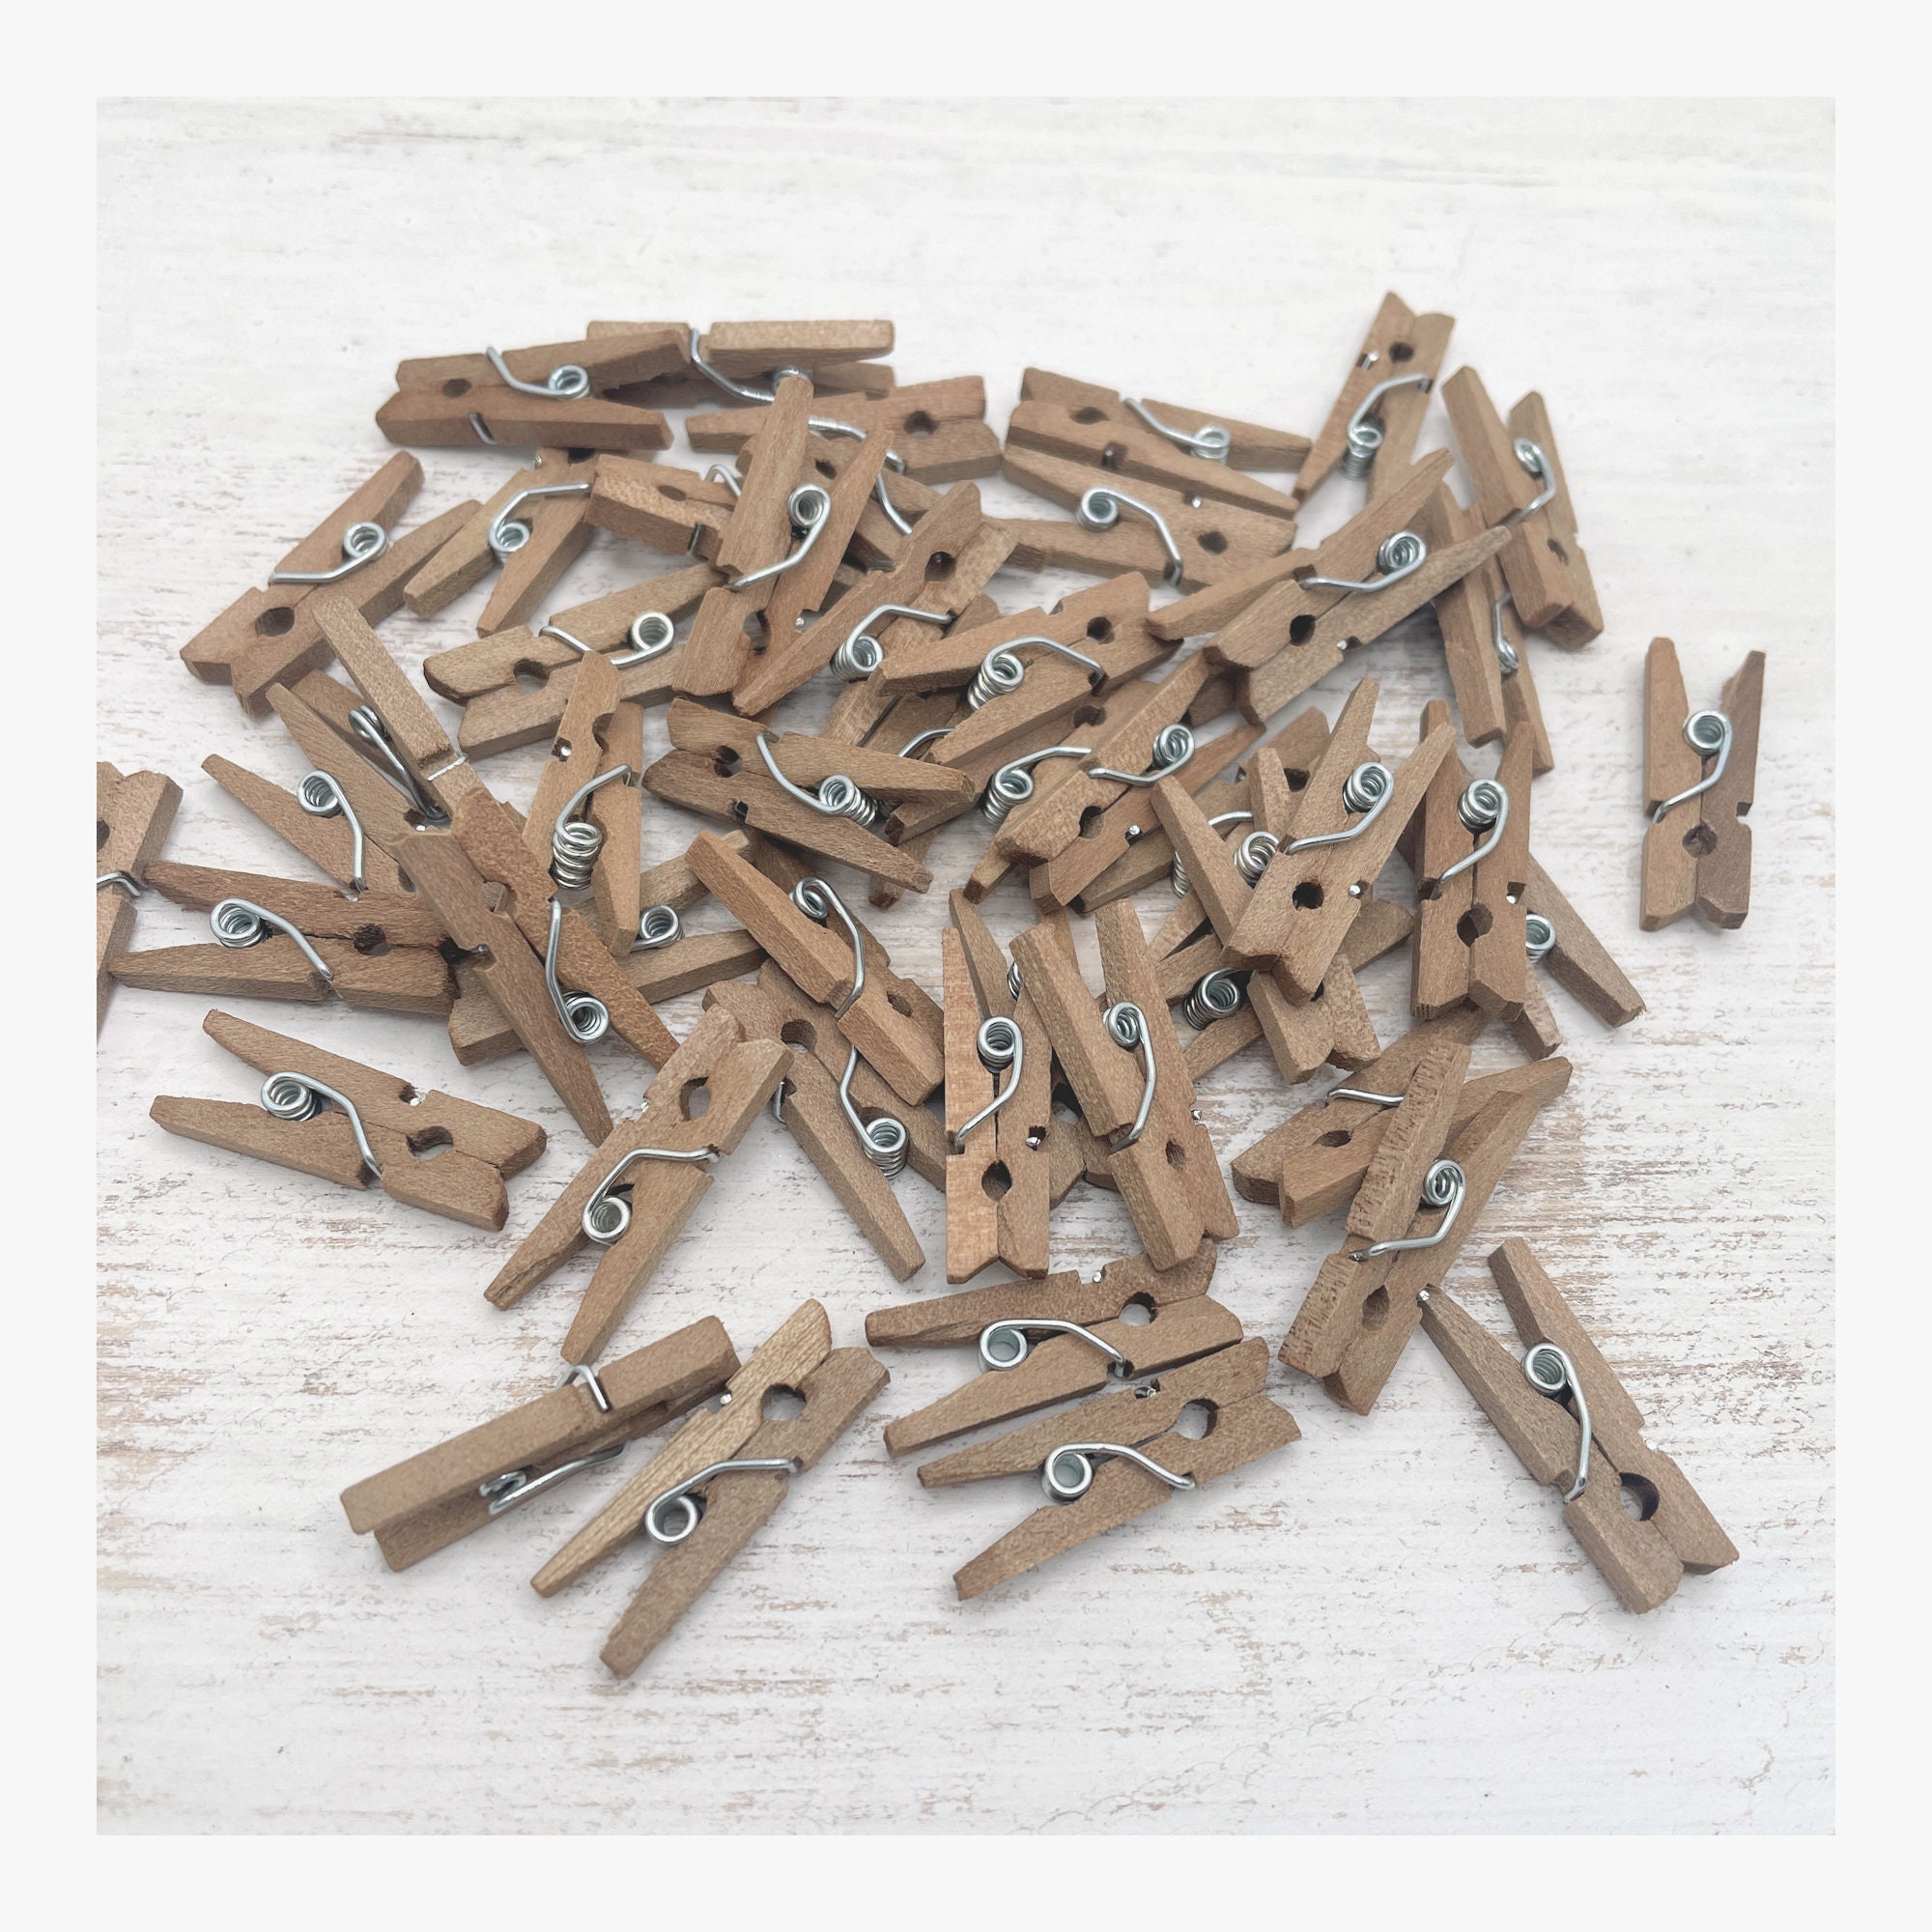 Heldig Mini Clothespins, 100pcs Sturdy Mixed Colored Wooden Mini